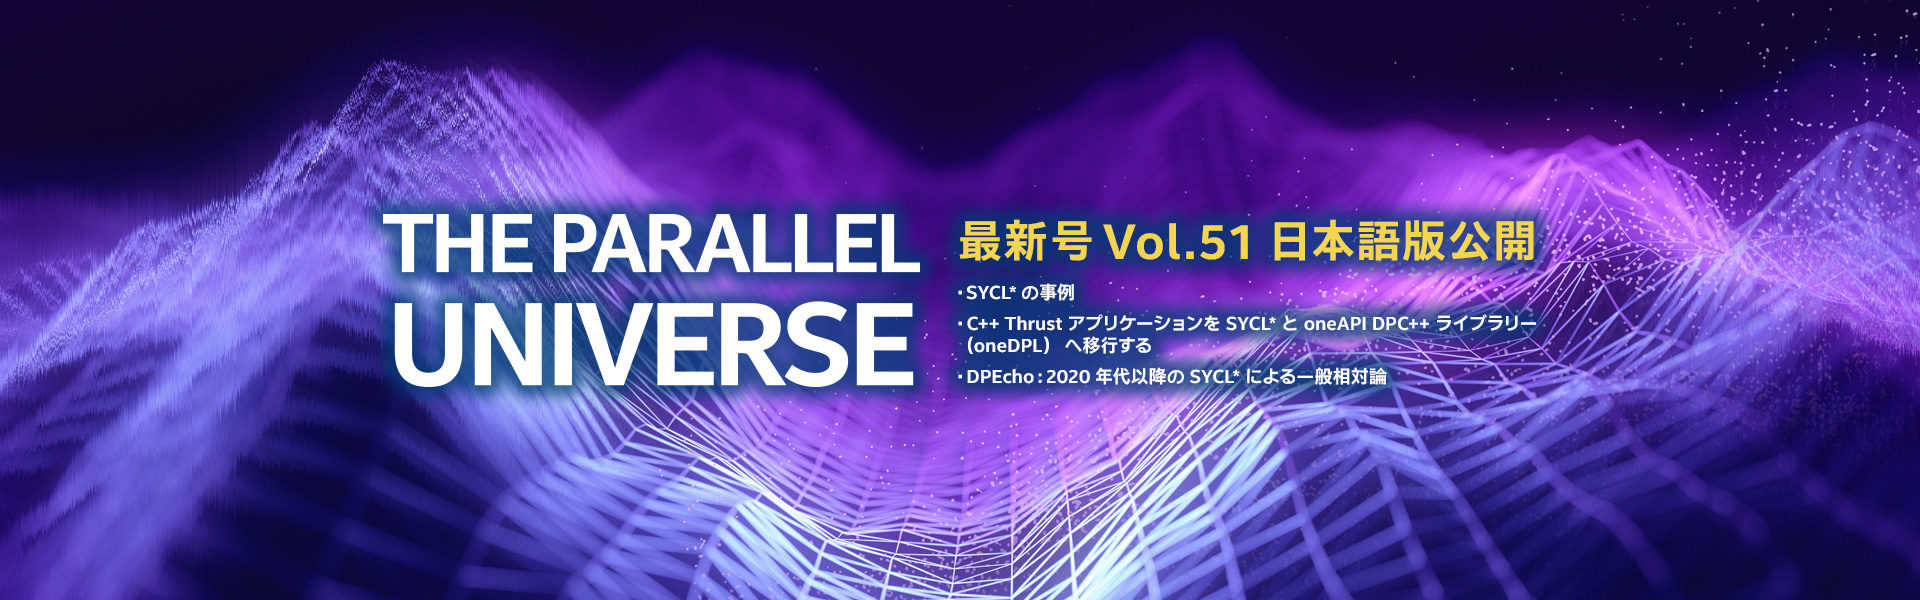 The Parallel Universe 最新号 Vol.51 日本語版公開中